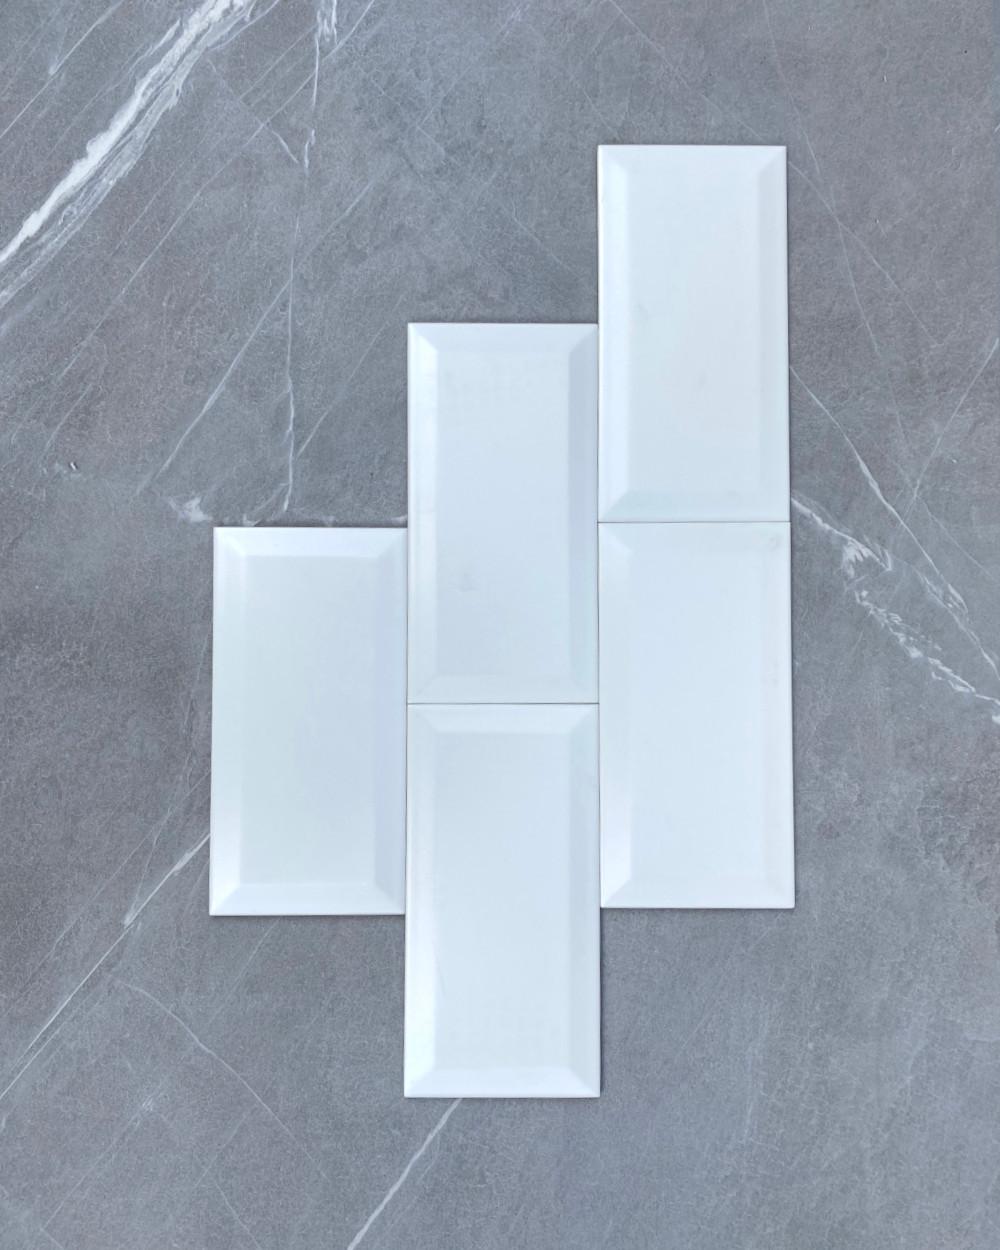 Metro Tile White Dull 10x20 cm with facet | Free shipping sample!